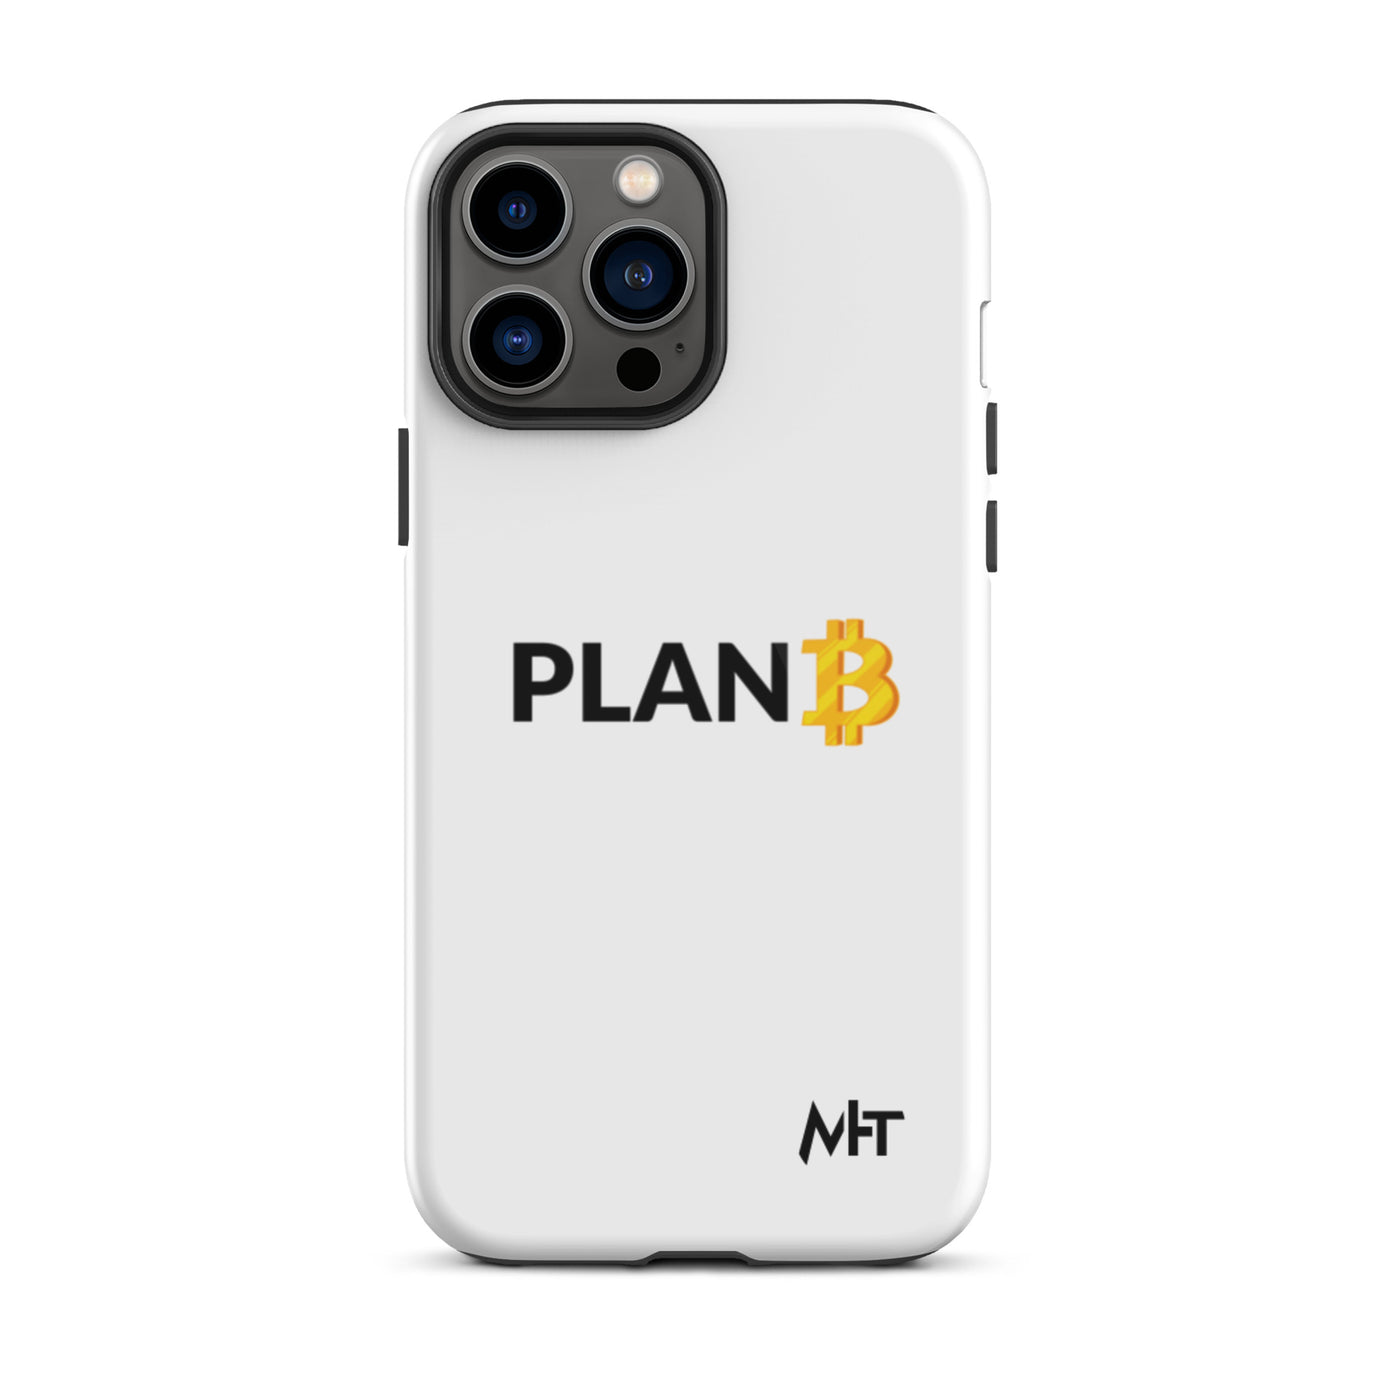 Plan B v1 - Tough iPhone case